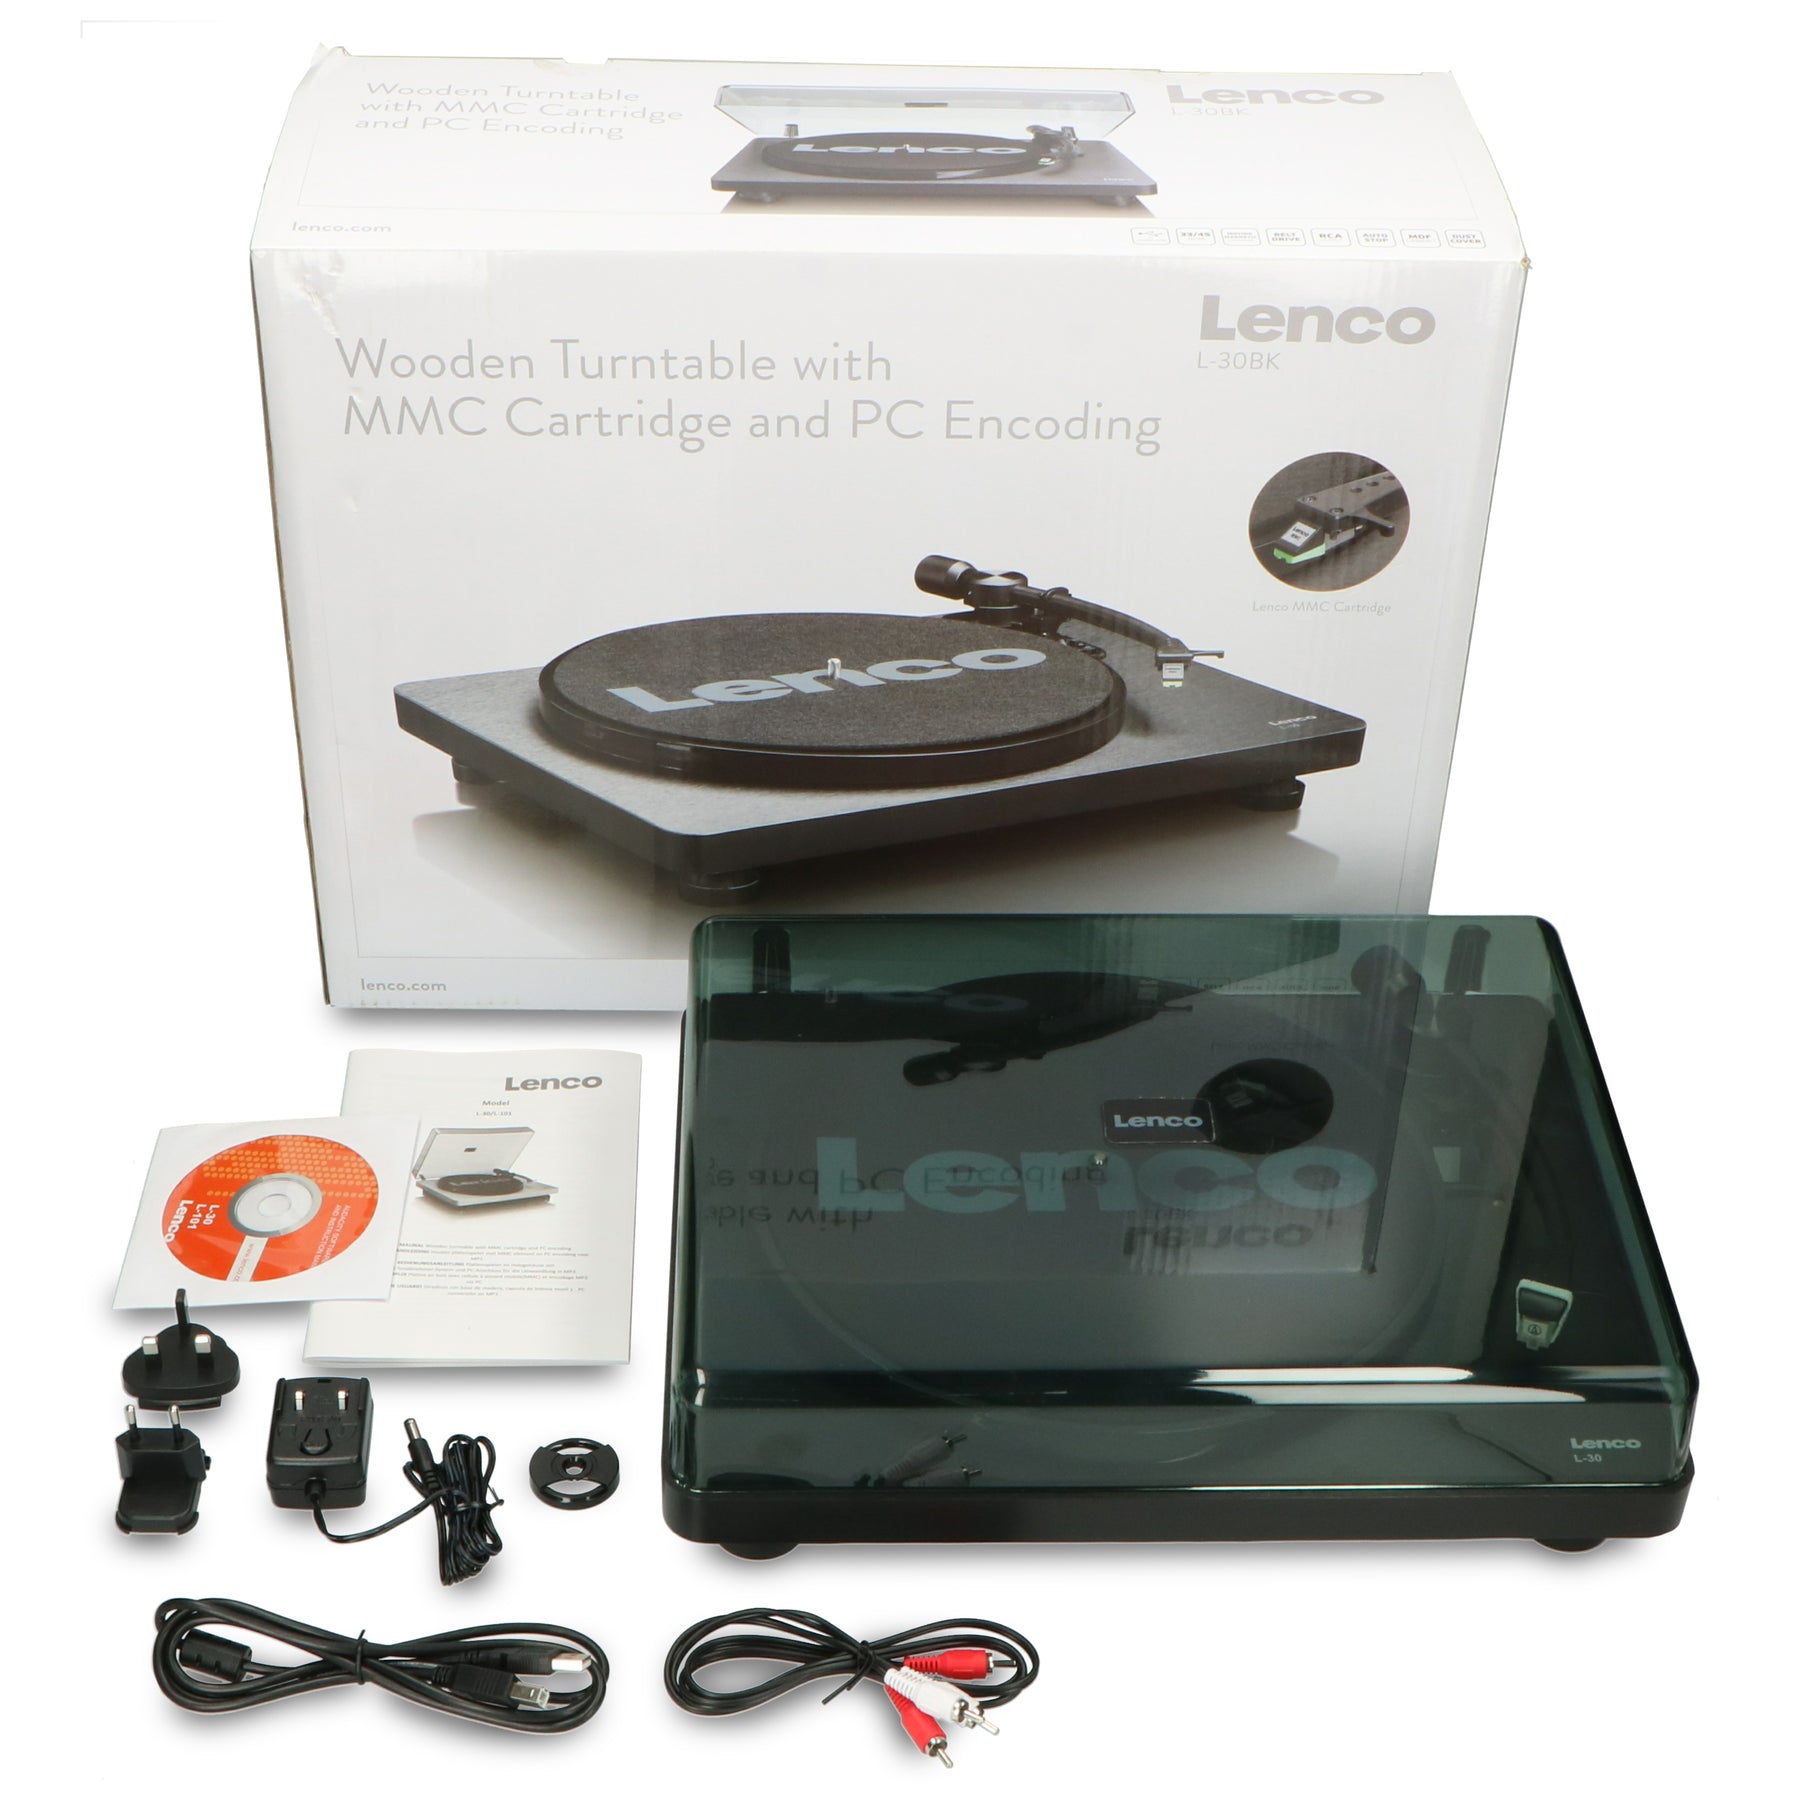 Lenco - Jetzt L-30 Lenco offiziellen Webshop | Lenco.de – Webshop kaufen? Offizieller im